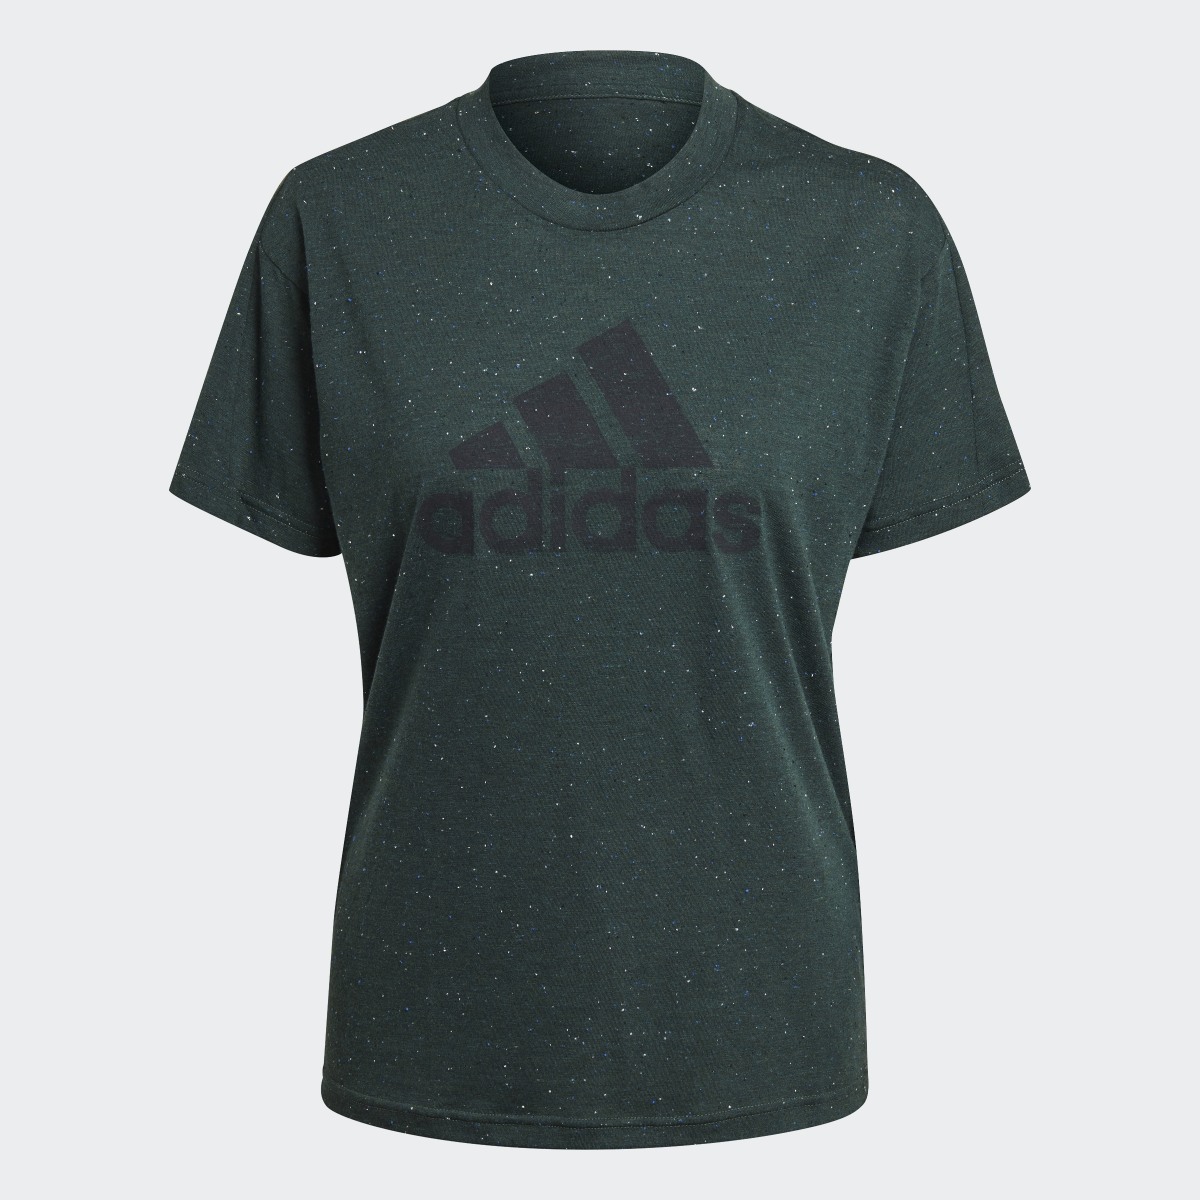 Adidas Camiseta Future Icons Winners 3. 5